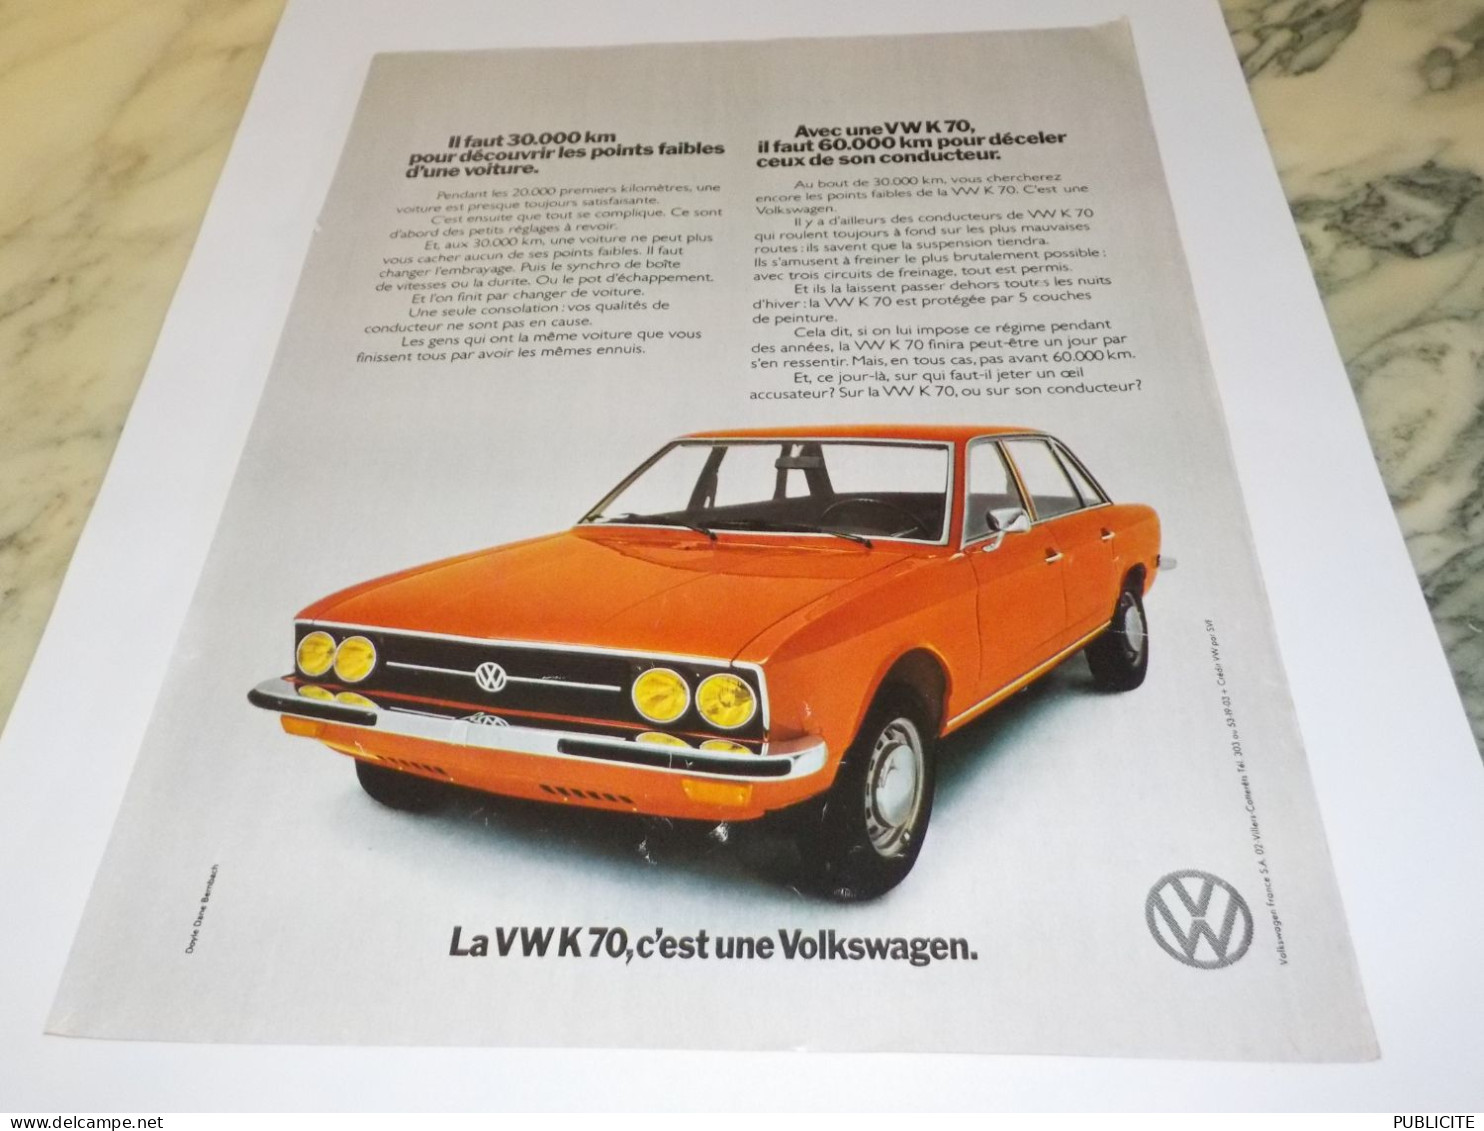 ANCIENNE PUBLICITE VW K 70 DE VOLKSWAGEN 1973 - Voitures